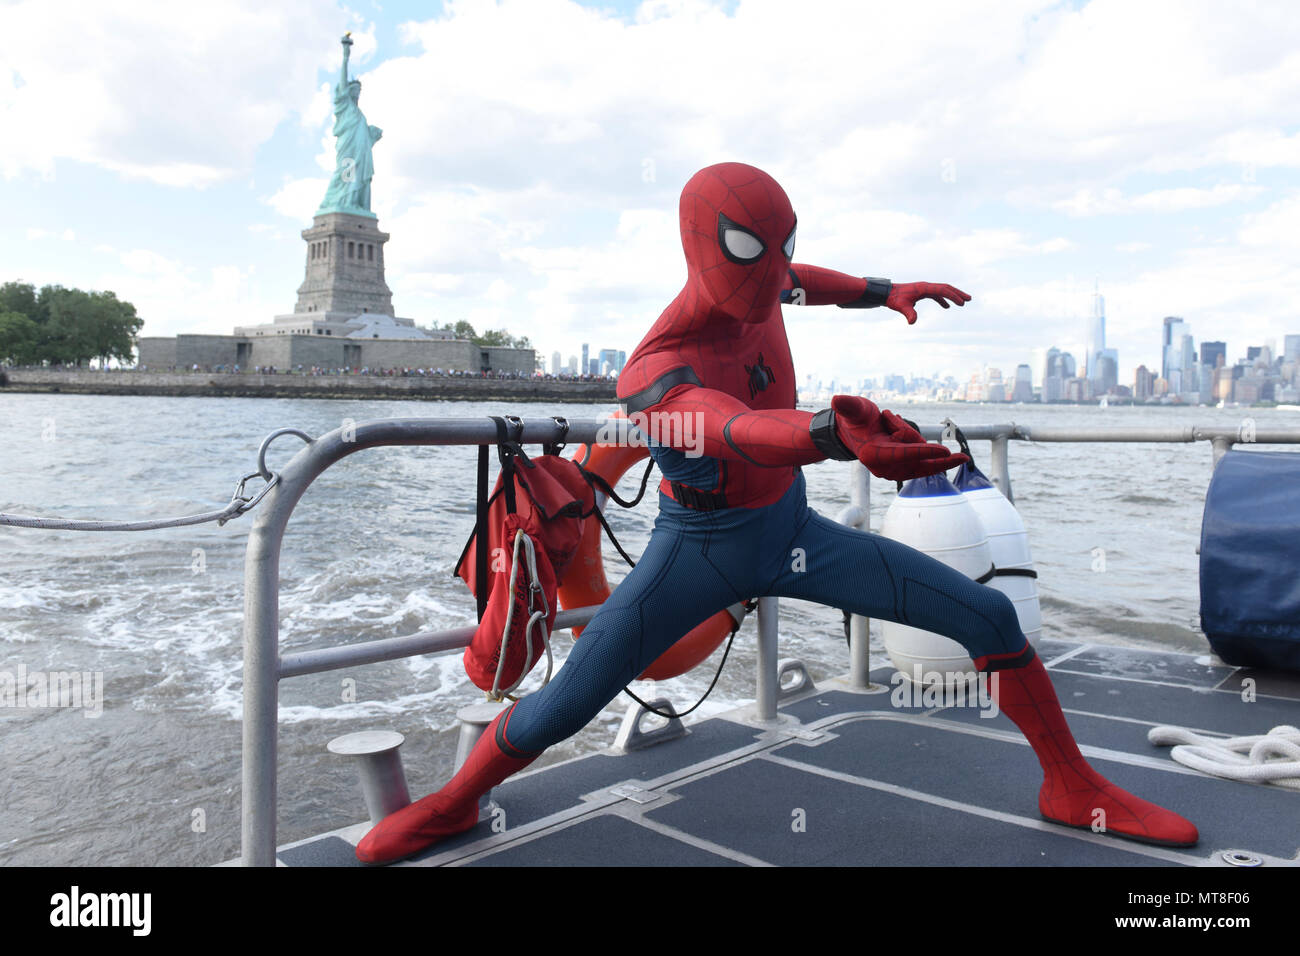 Marvel's Spider-Man Vector 2 by alvaxerox on DeviantArt